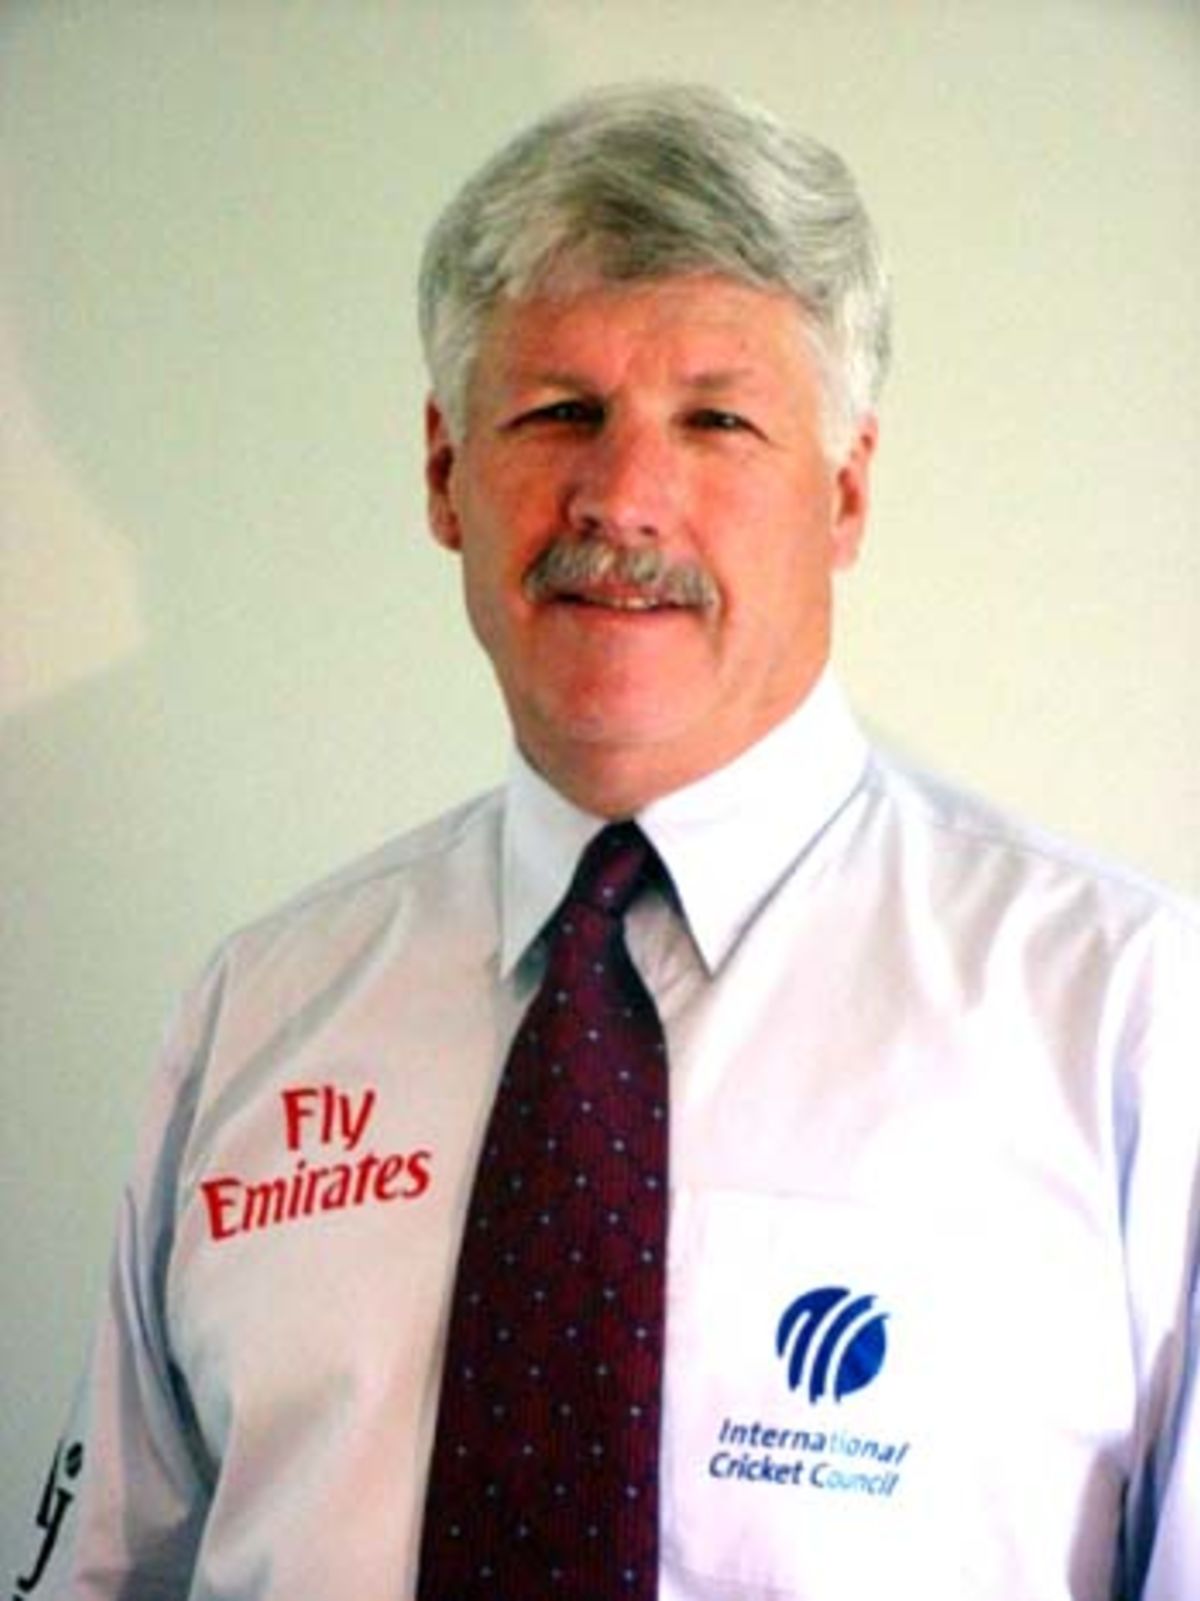 ICC Match Referee Alan Hurst